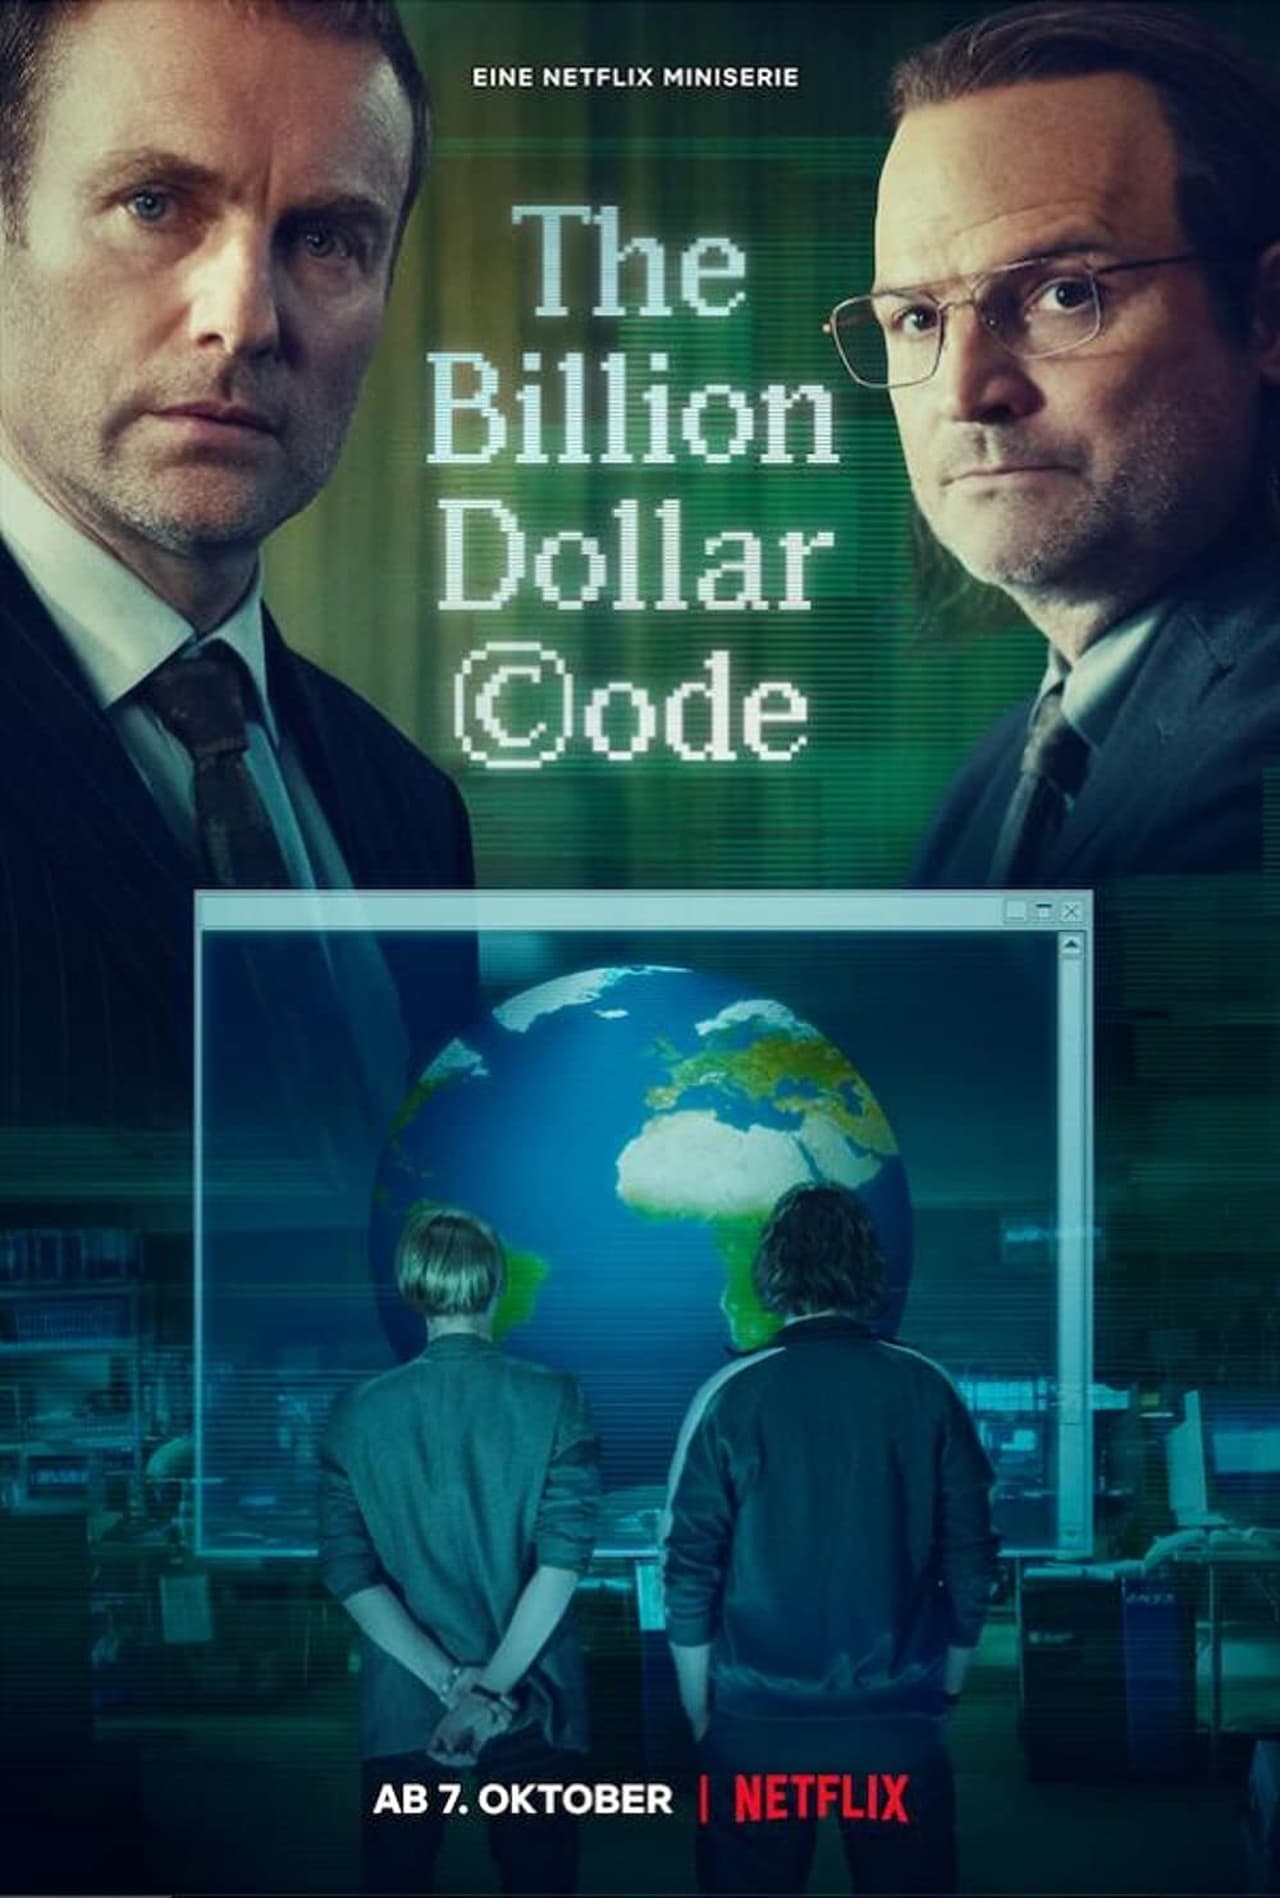 The Billion Dollar Code (season 1)